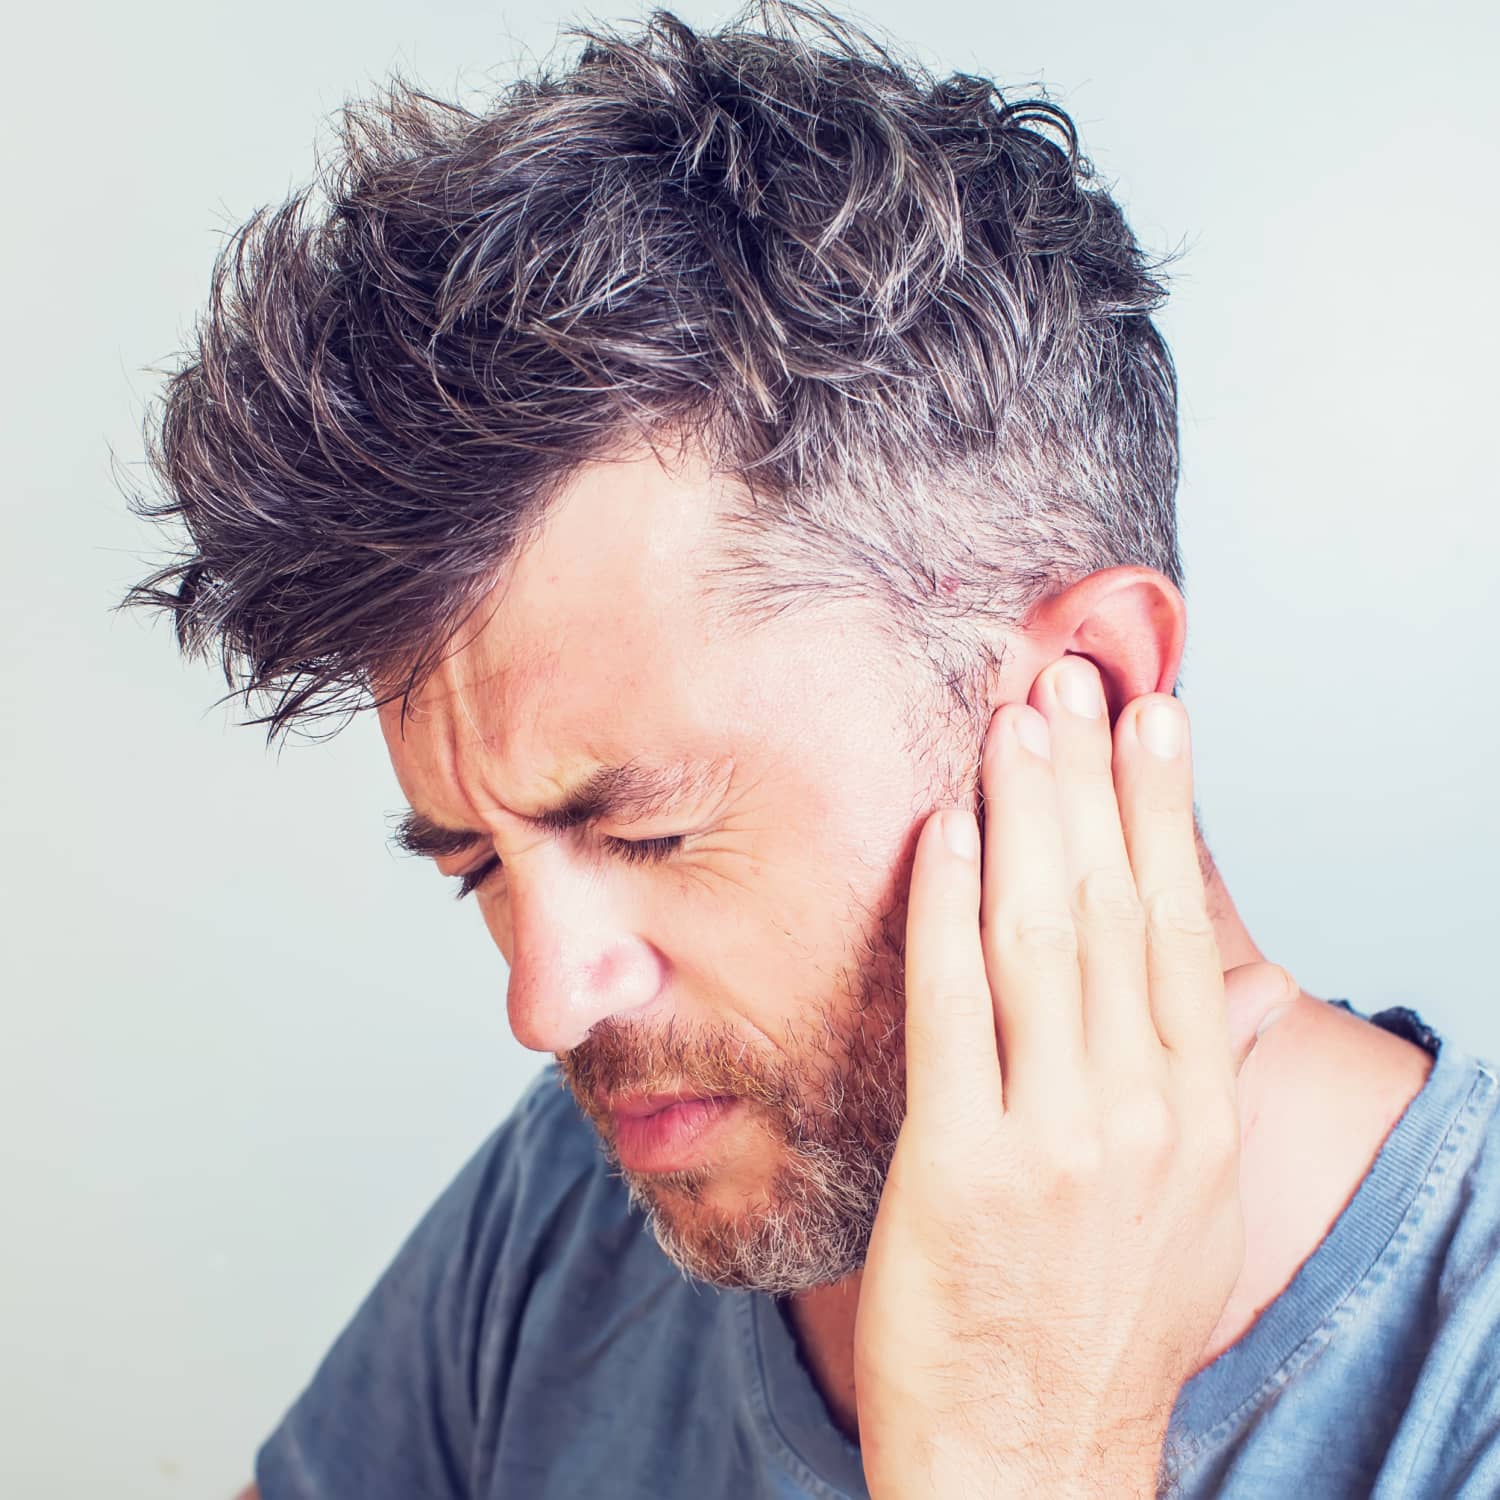 Significant Hearing Loss